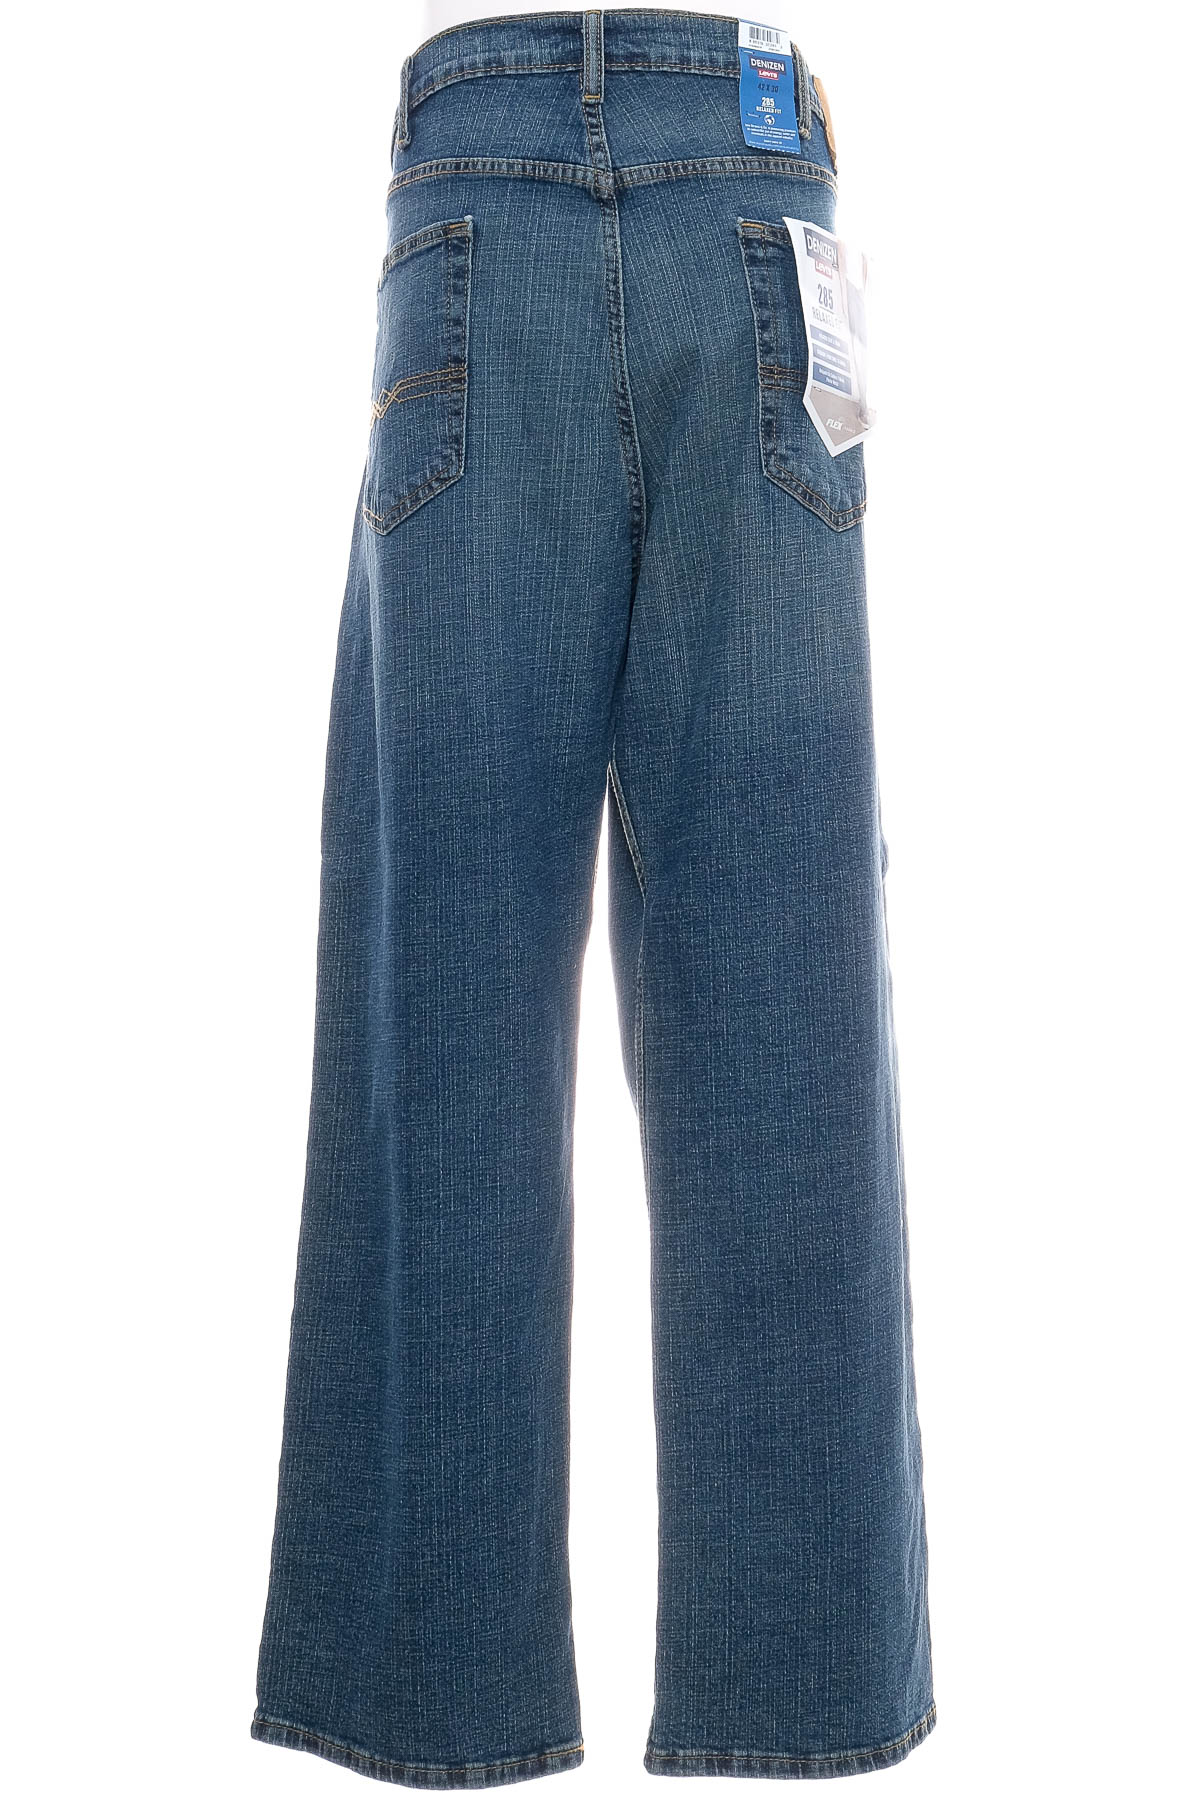 Jeans pentru bărbăți - DENIZEN FROM LEVI'S - 1